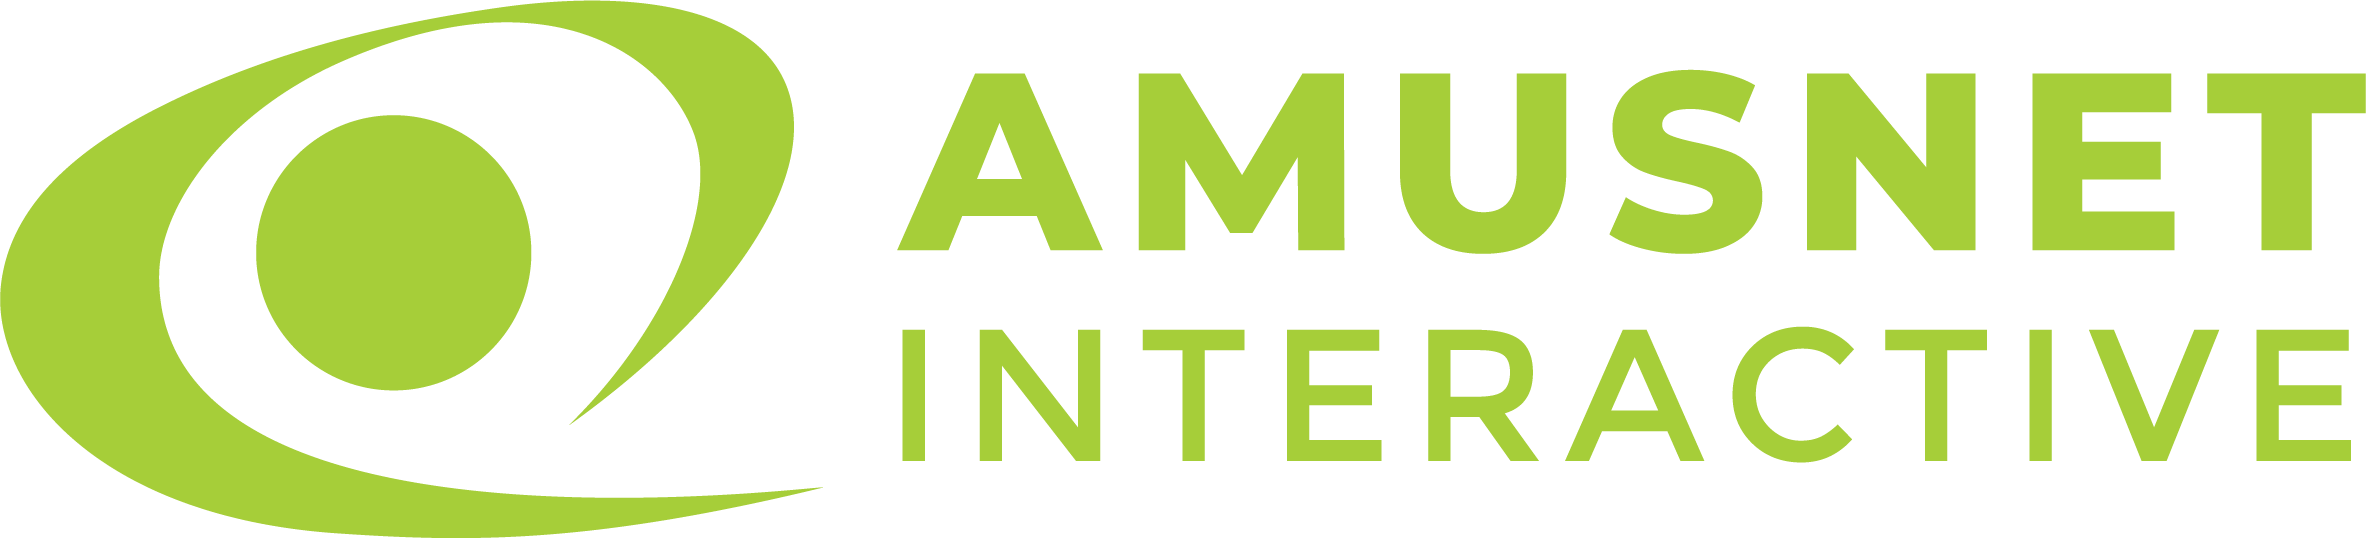 Amusnet Interactieve